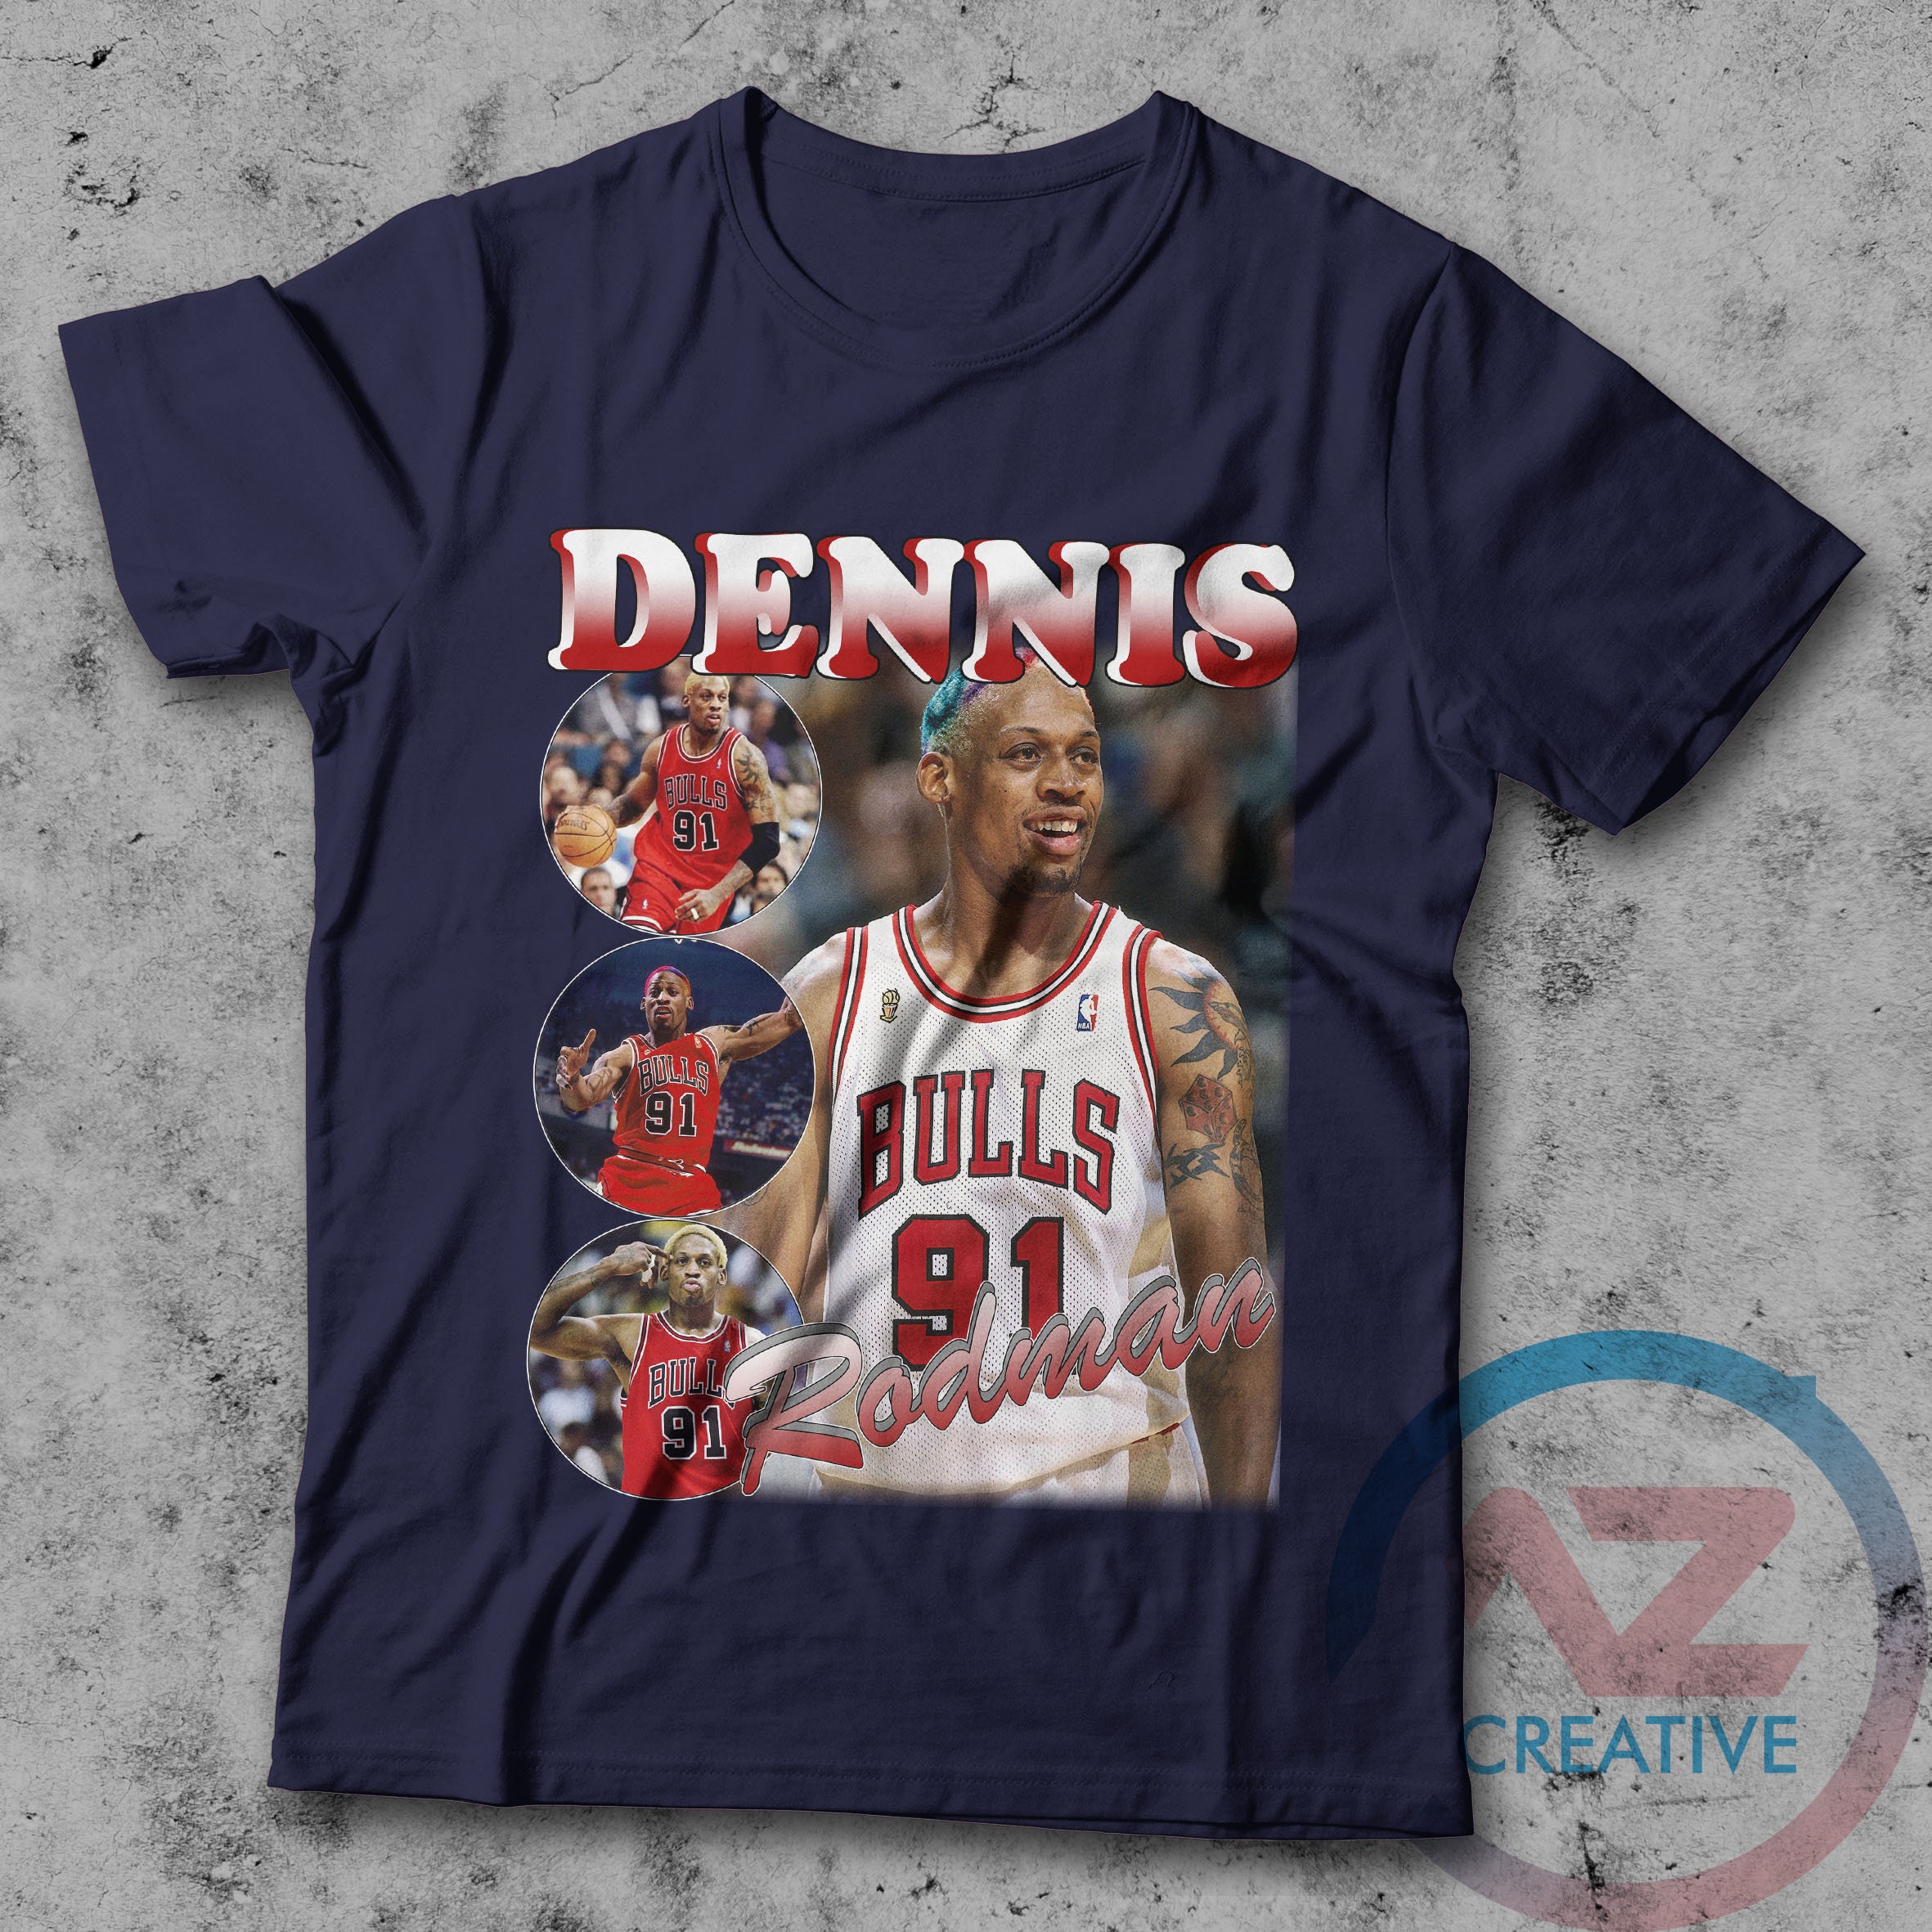 Dennis Rodman Shirt Vintage Inspired 90's Rap Unisex T-shirt NBA